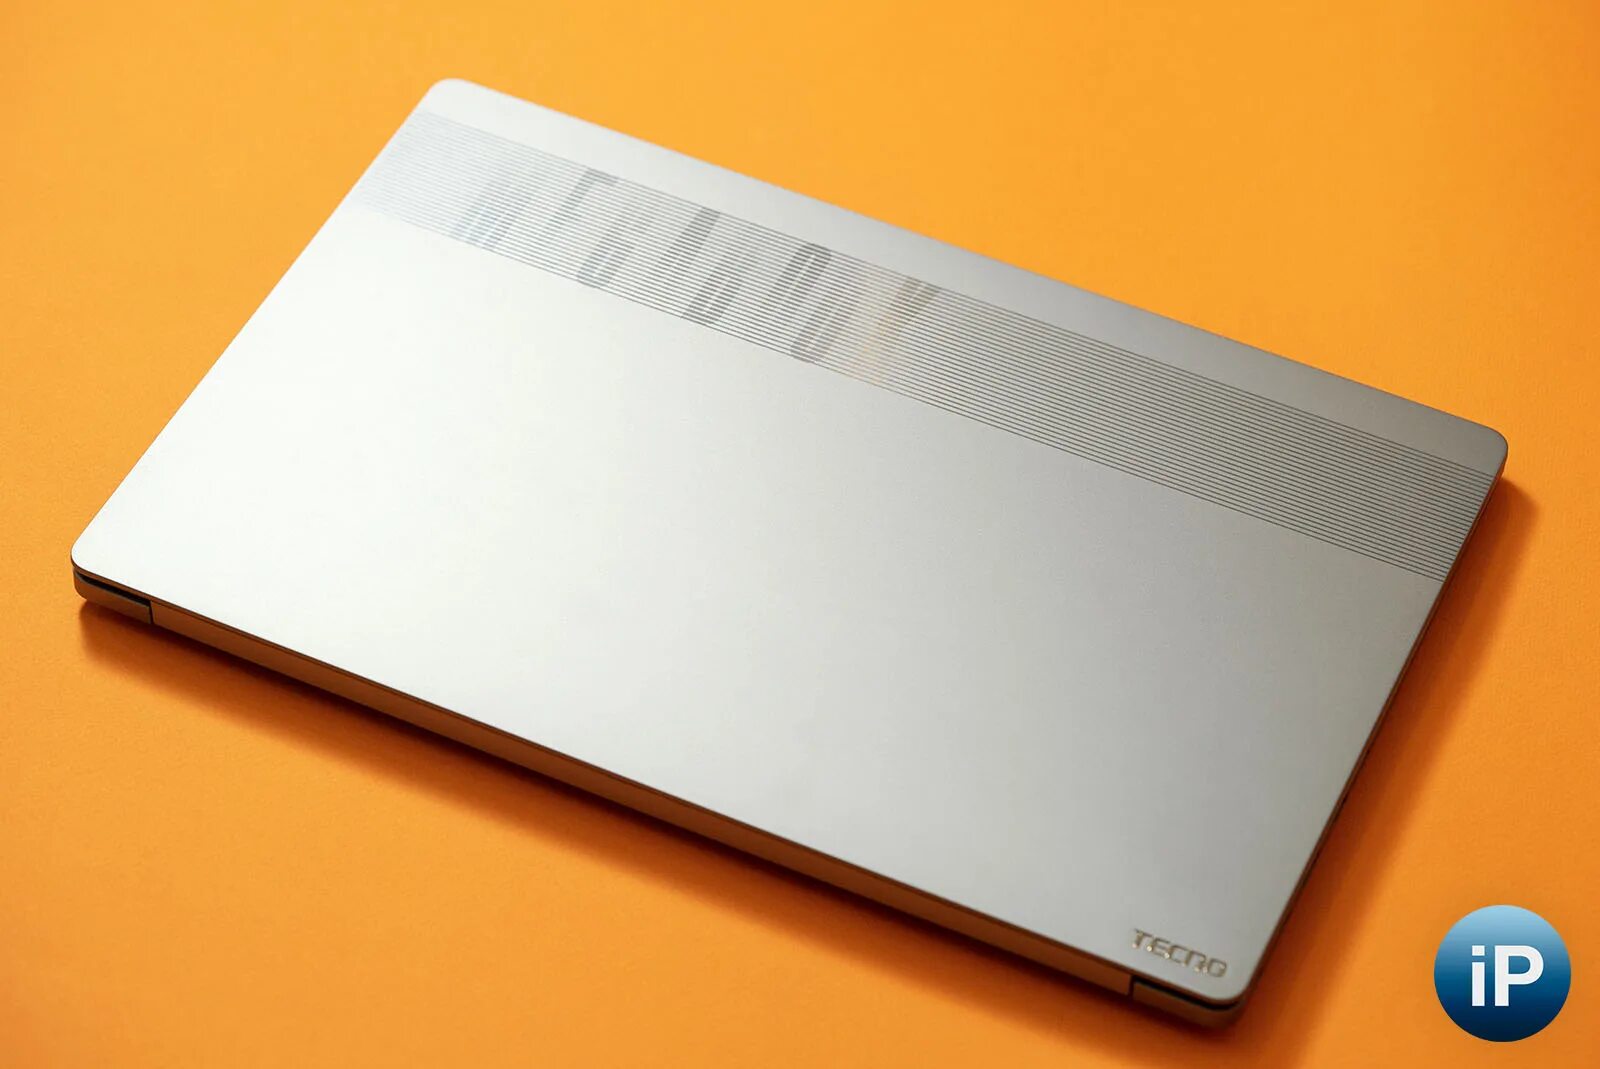 Ноутбук MEGABOOK. Techno ноутбук MEGABOOK цвета. Матрица ноутбука Techno MEGABOOK t1. Ноутбук Tecno MEGABOOK t1 синий. Tecno megabook t1 5560u